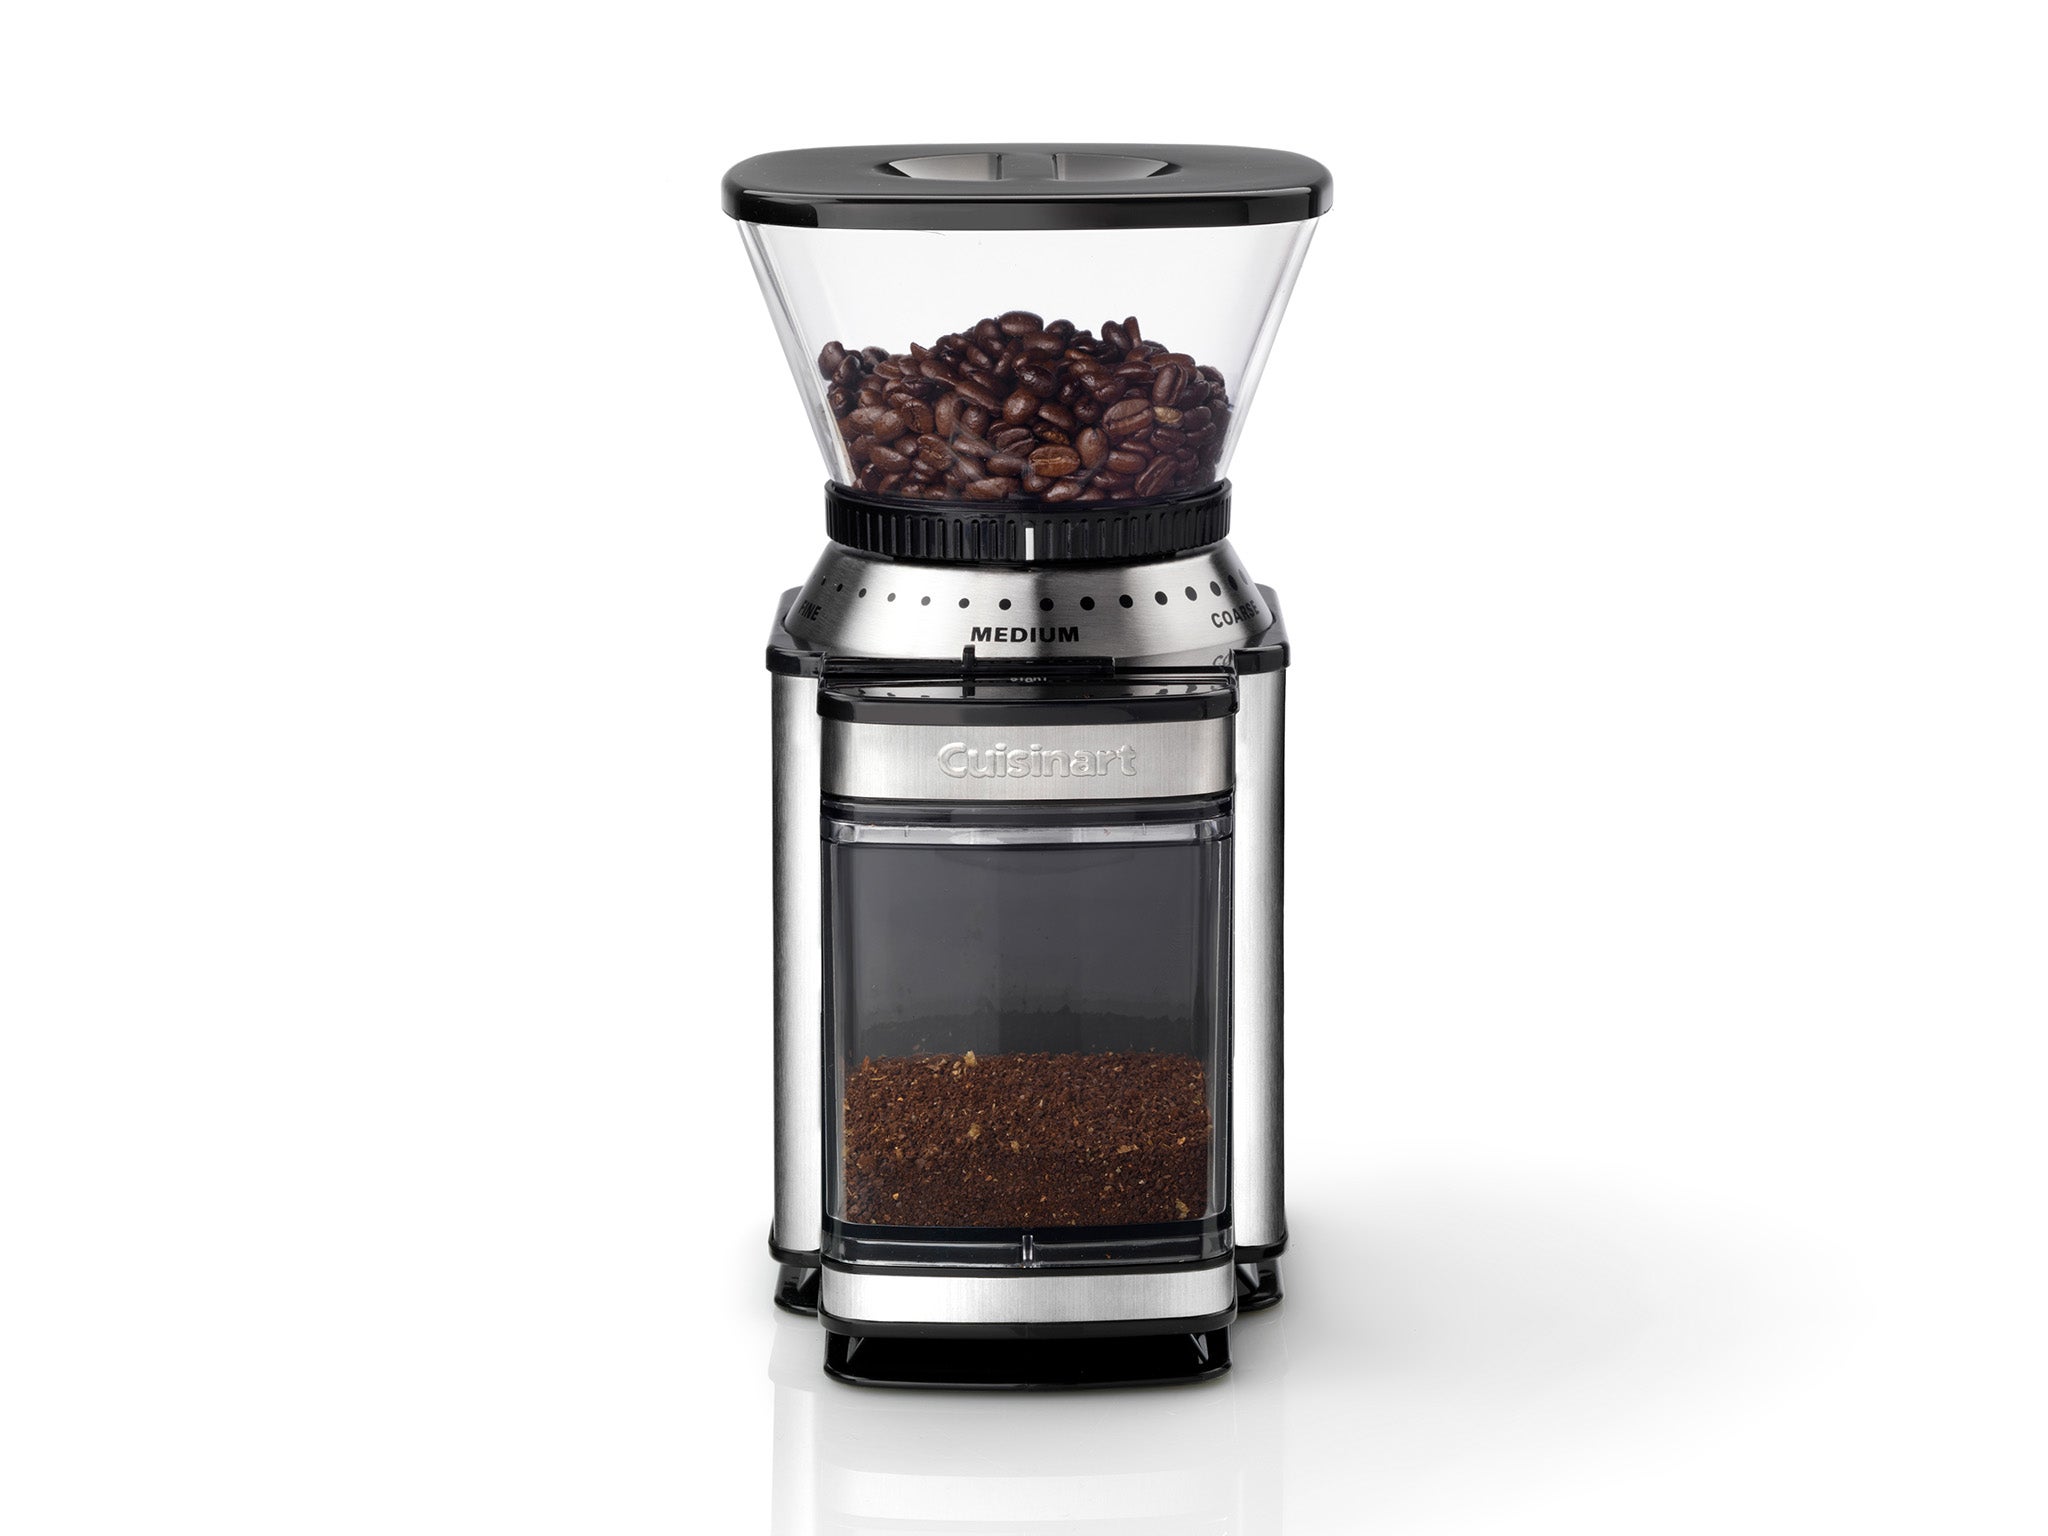 Premium 220V elettrico in acciaio SteelHousehold Grinding fresatrice Coffee Bean Grinder Tool Home per dado Seed 